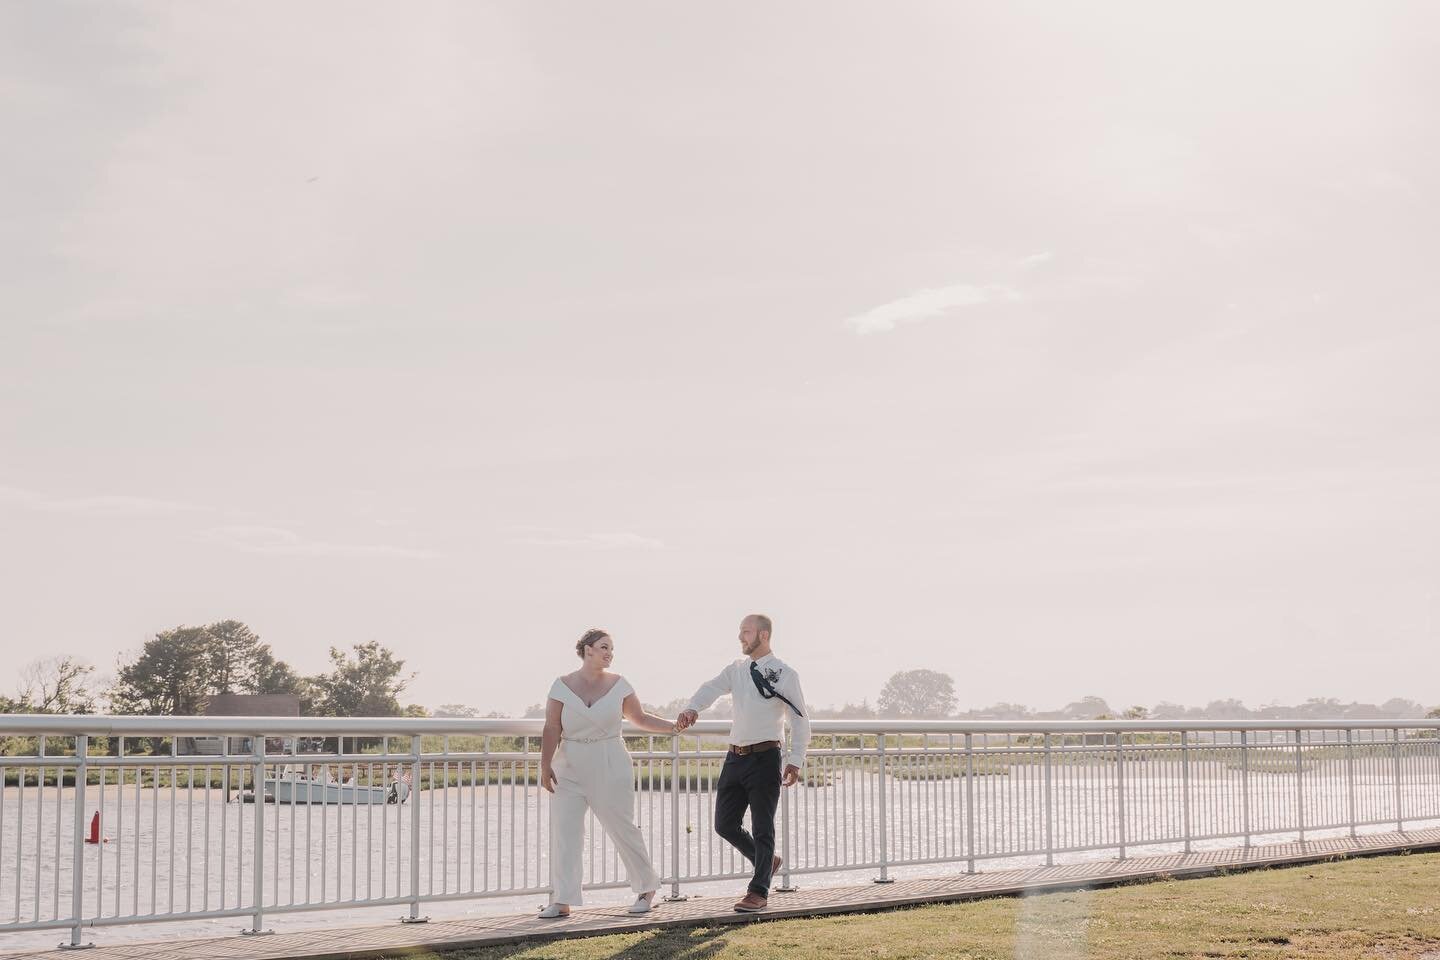 ToniAnn + Nick - June 26, 2021 - Long Island NY 
&bull;
&bull;
&bull;
#wedding #boatwedding #photography #weddingphotography #newyorkphotographer #nyweddingphotographer #pakistaniphotographers #bride #brideandgroom #casualwedding #wonderwall #love #w